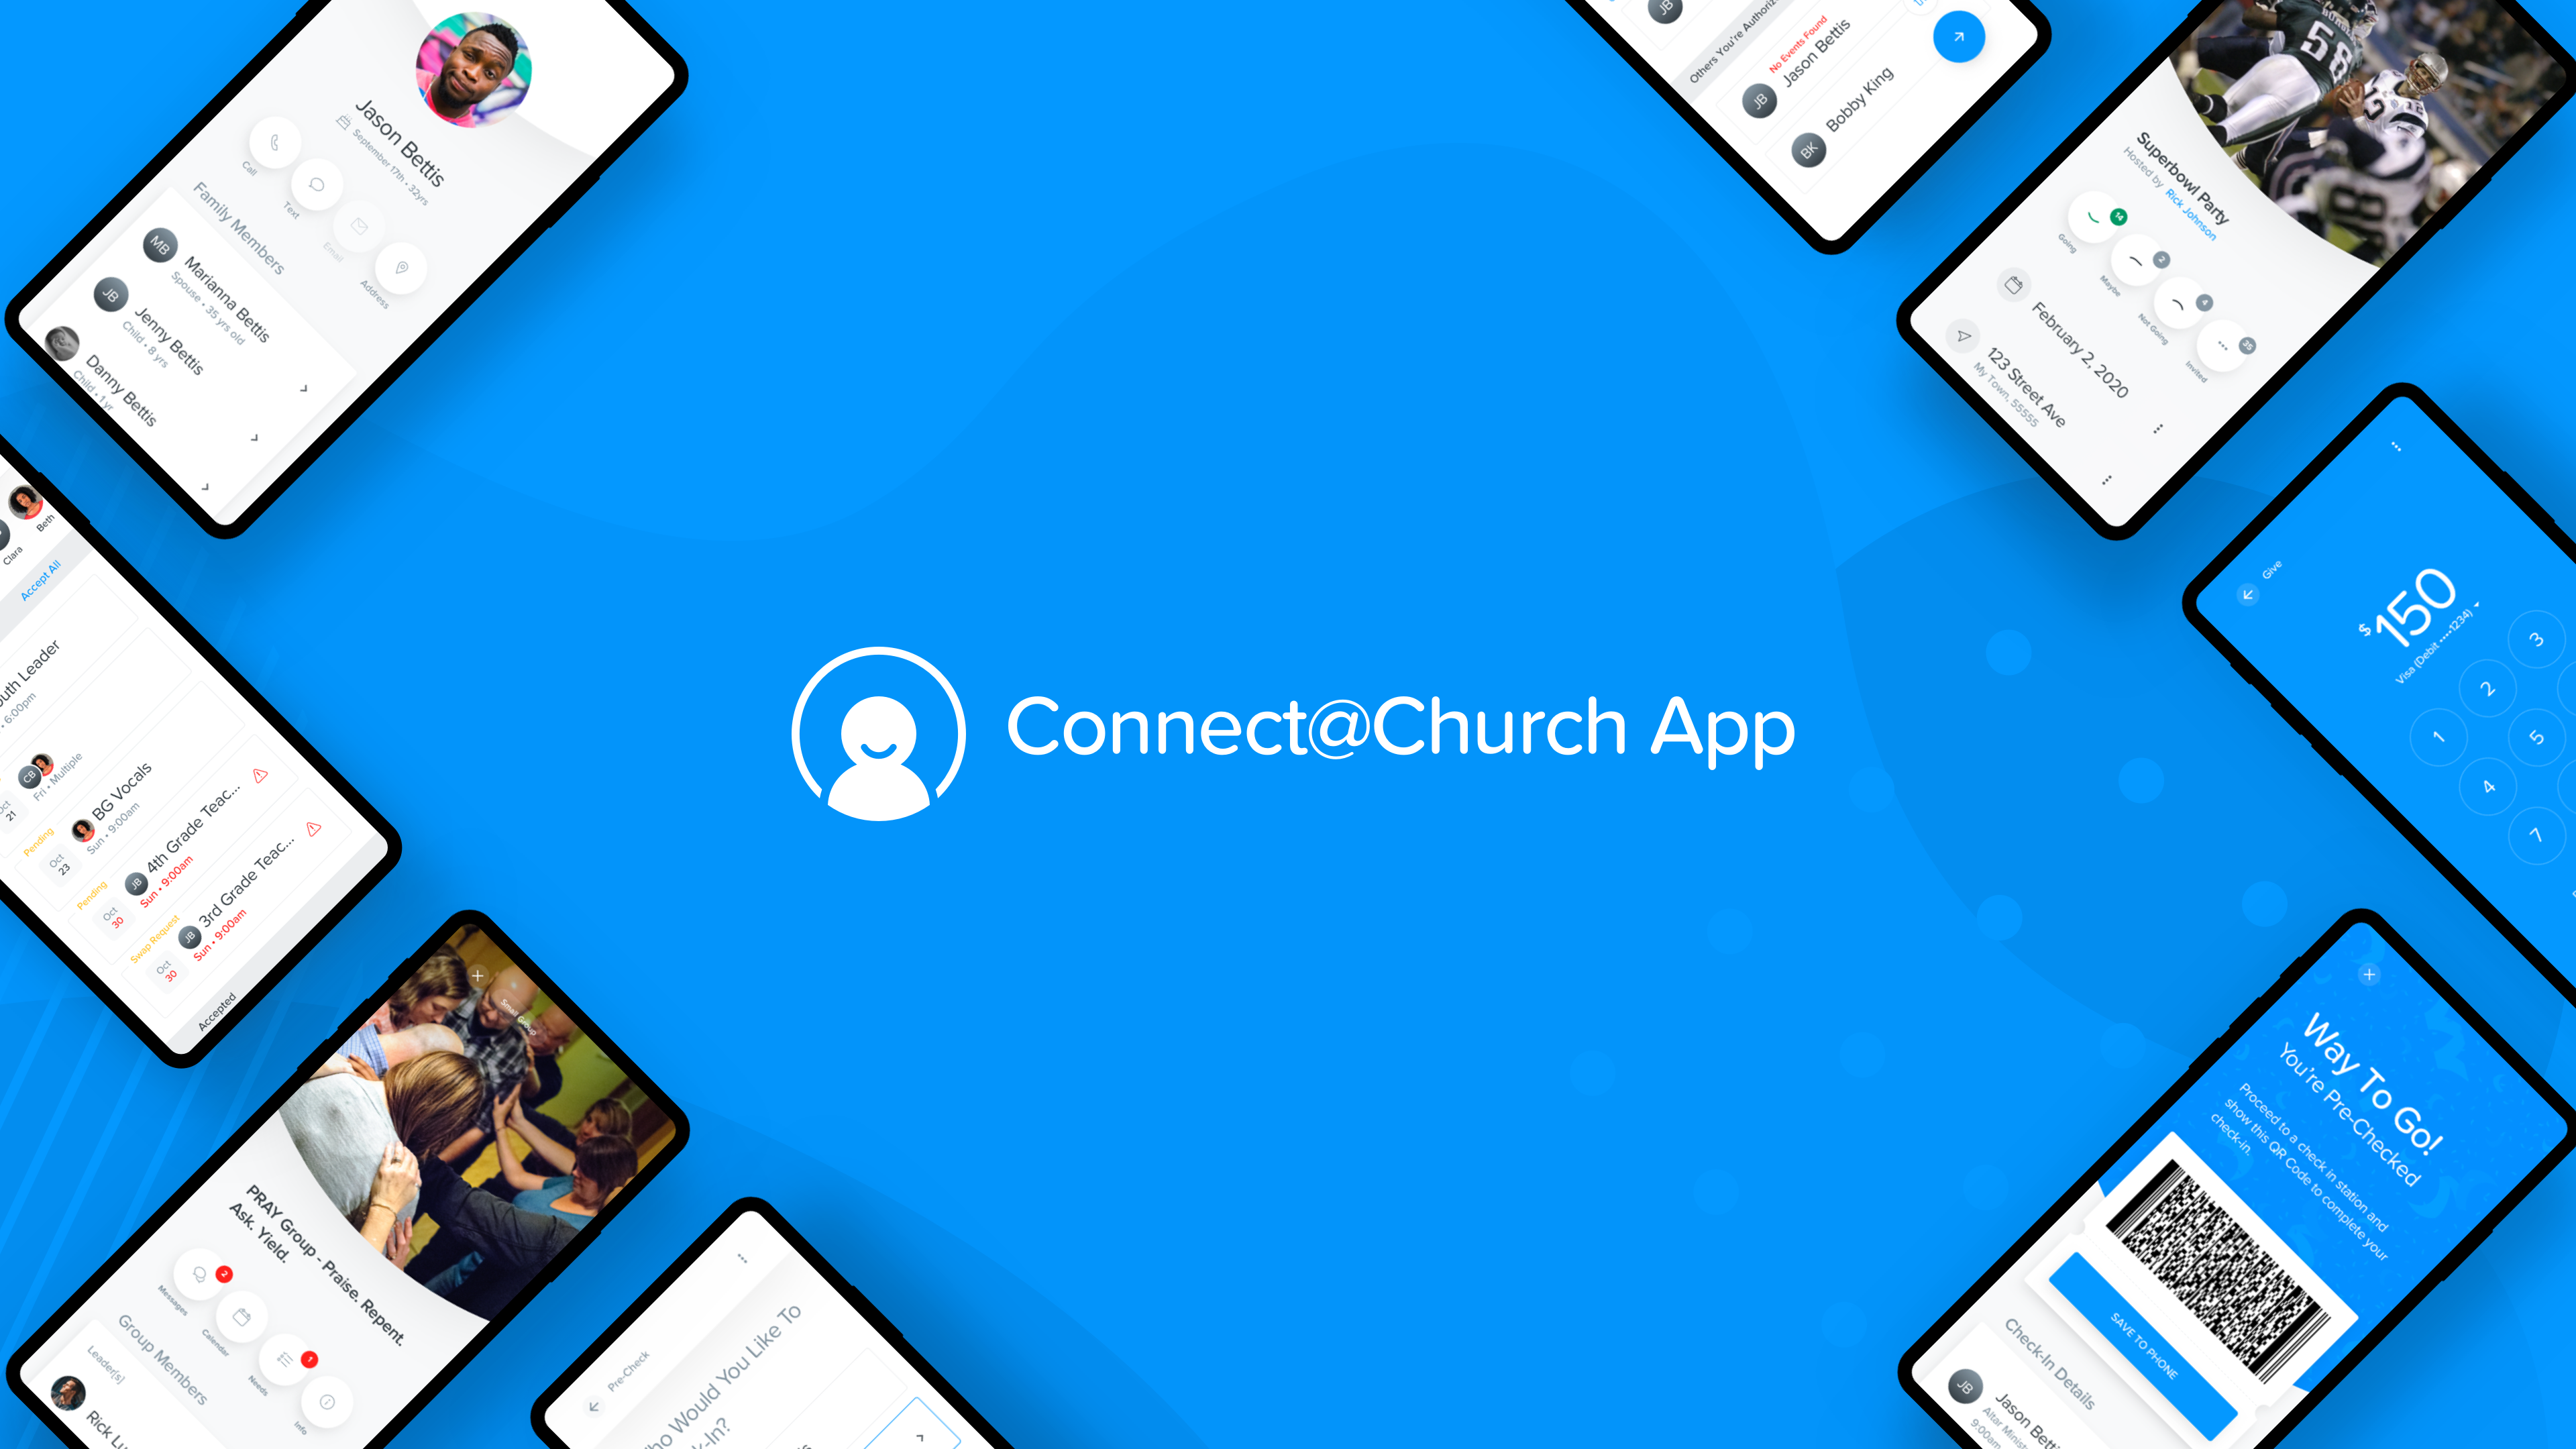 Connect@ChurchApp_1920x1080-2